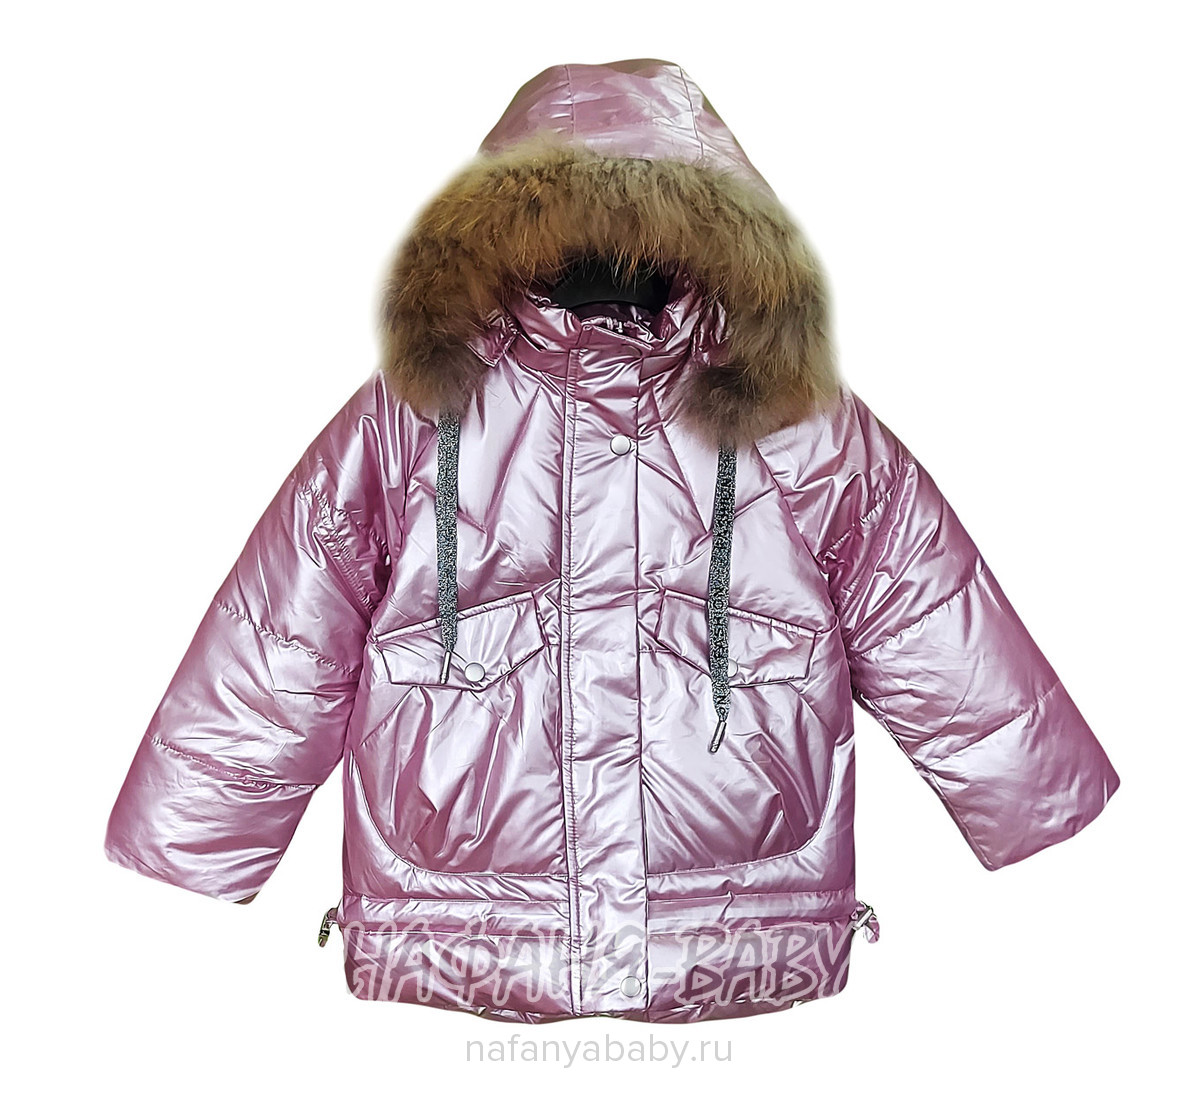 Зимняя куртка  YOI LI, купить в интернет магазине Нафаня. арт: 226.